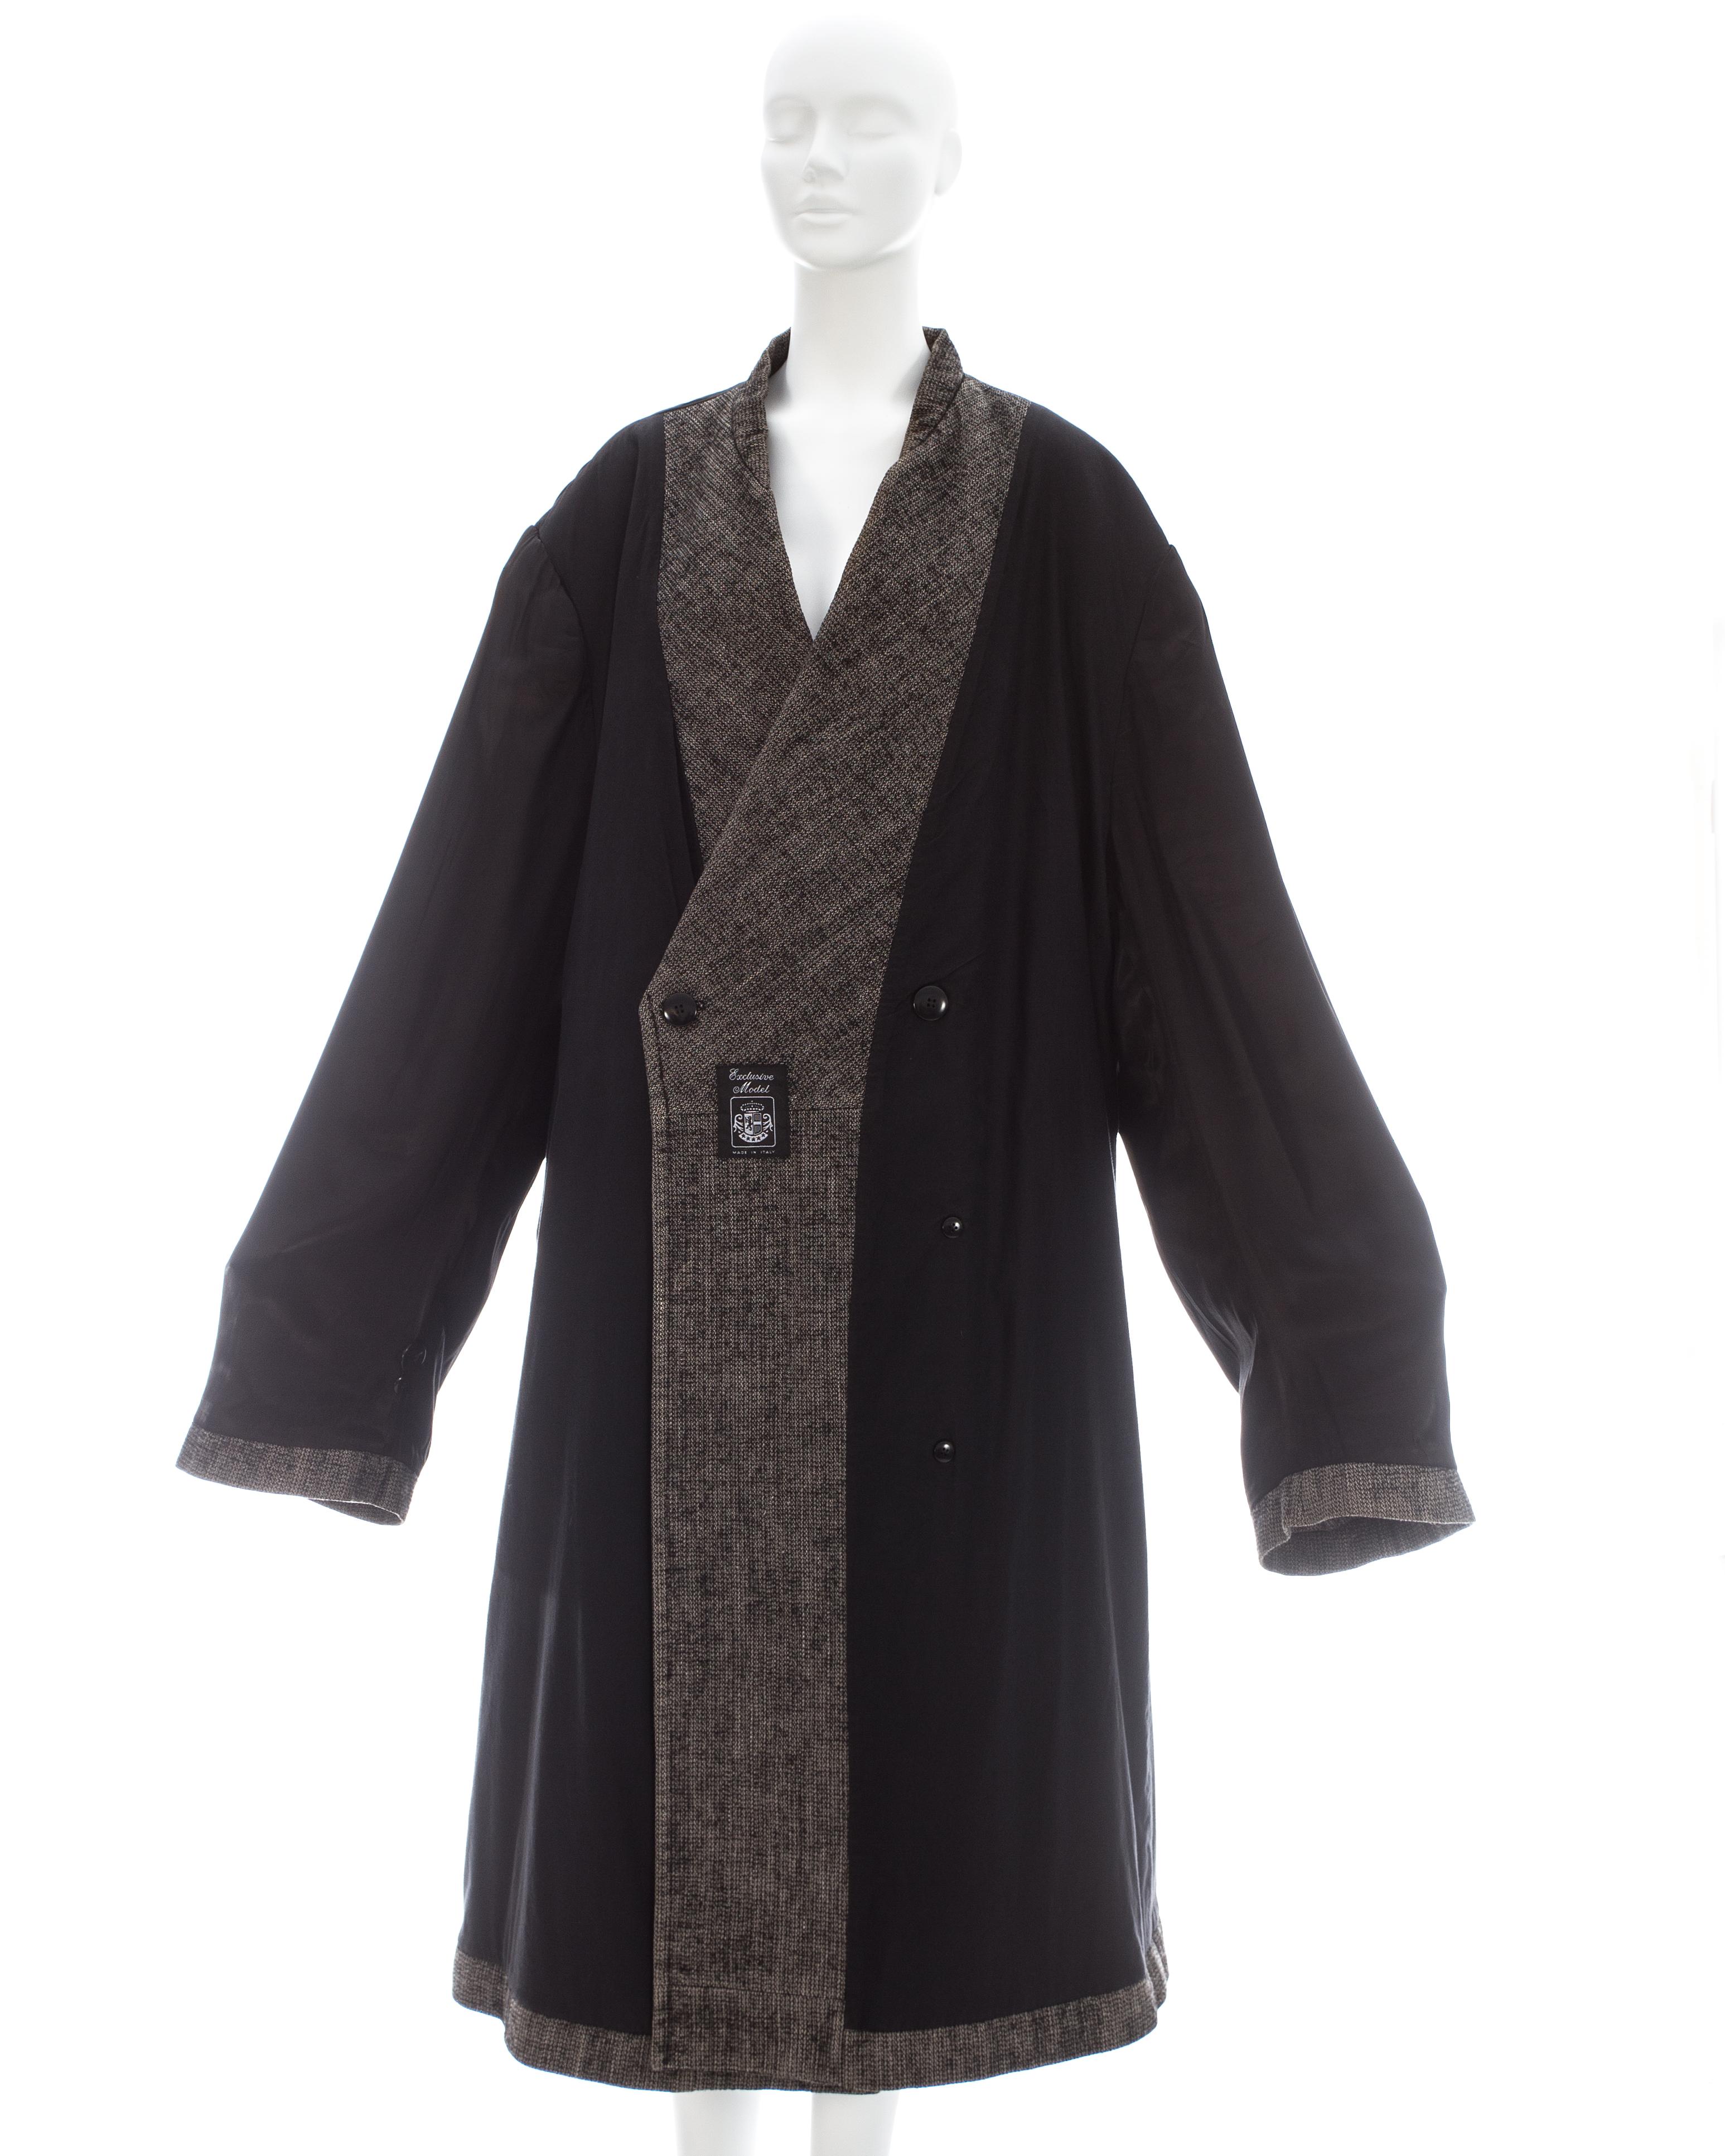 Martin Margiela grey wool and linen XXL size 78 double inside coat, fw 2000 For Sale 8